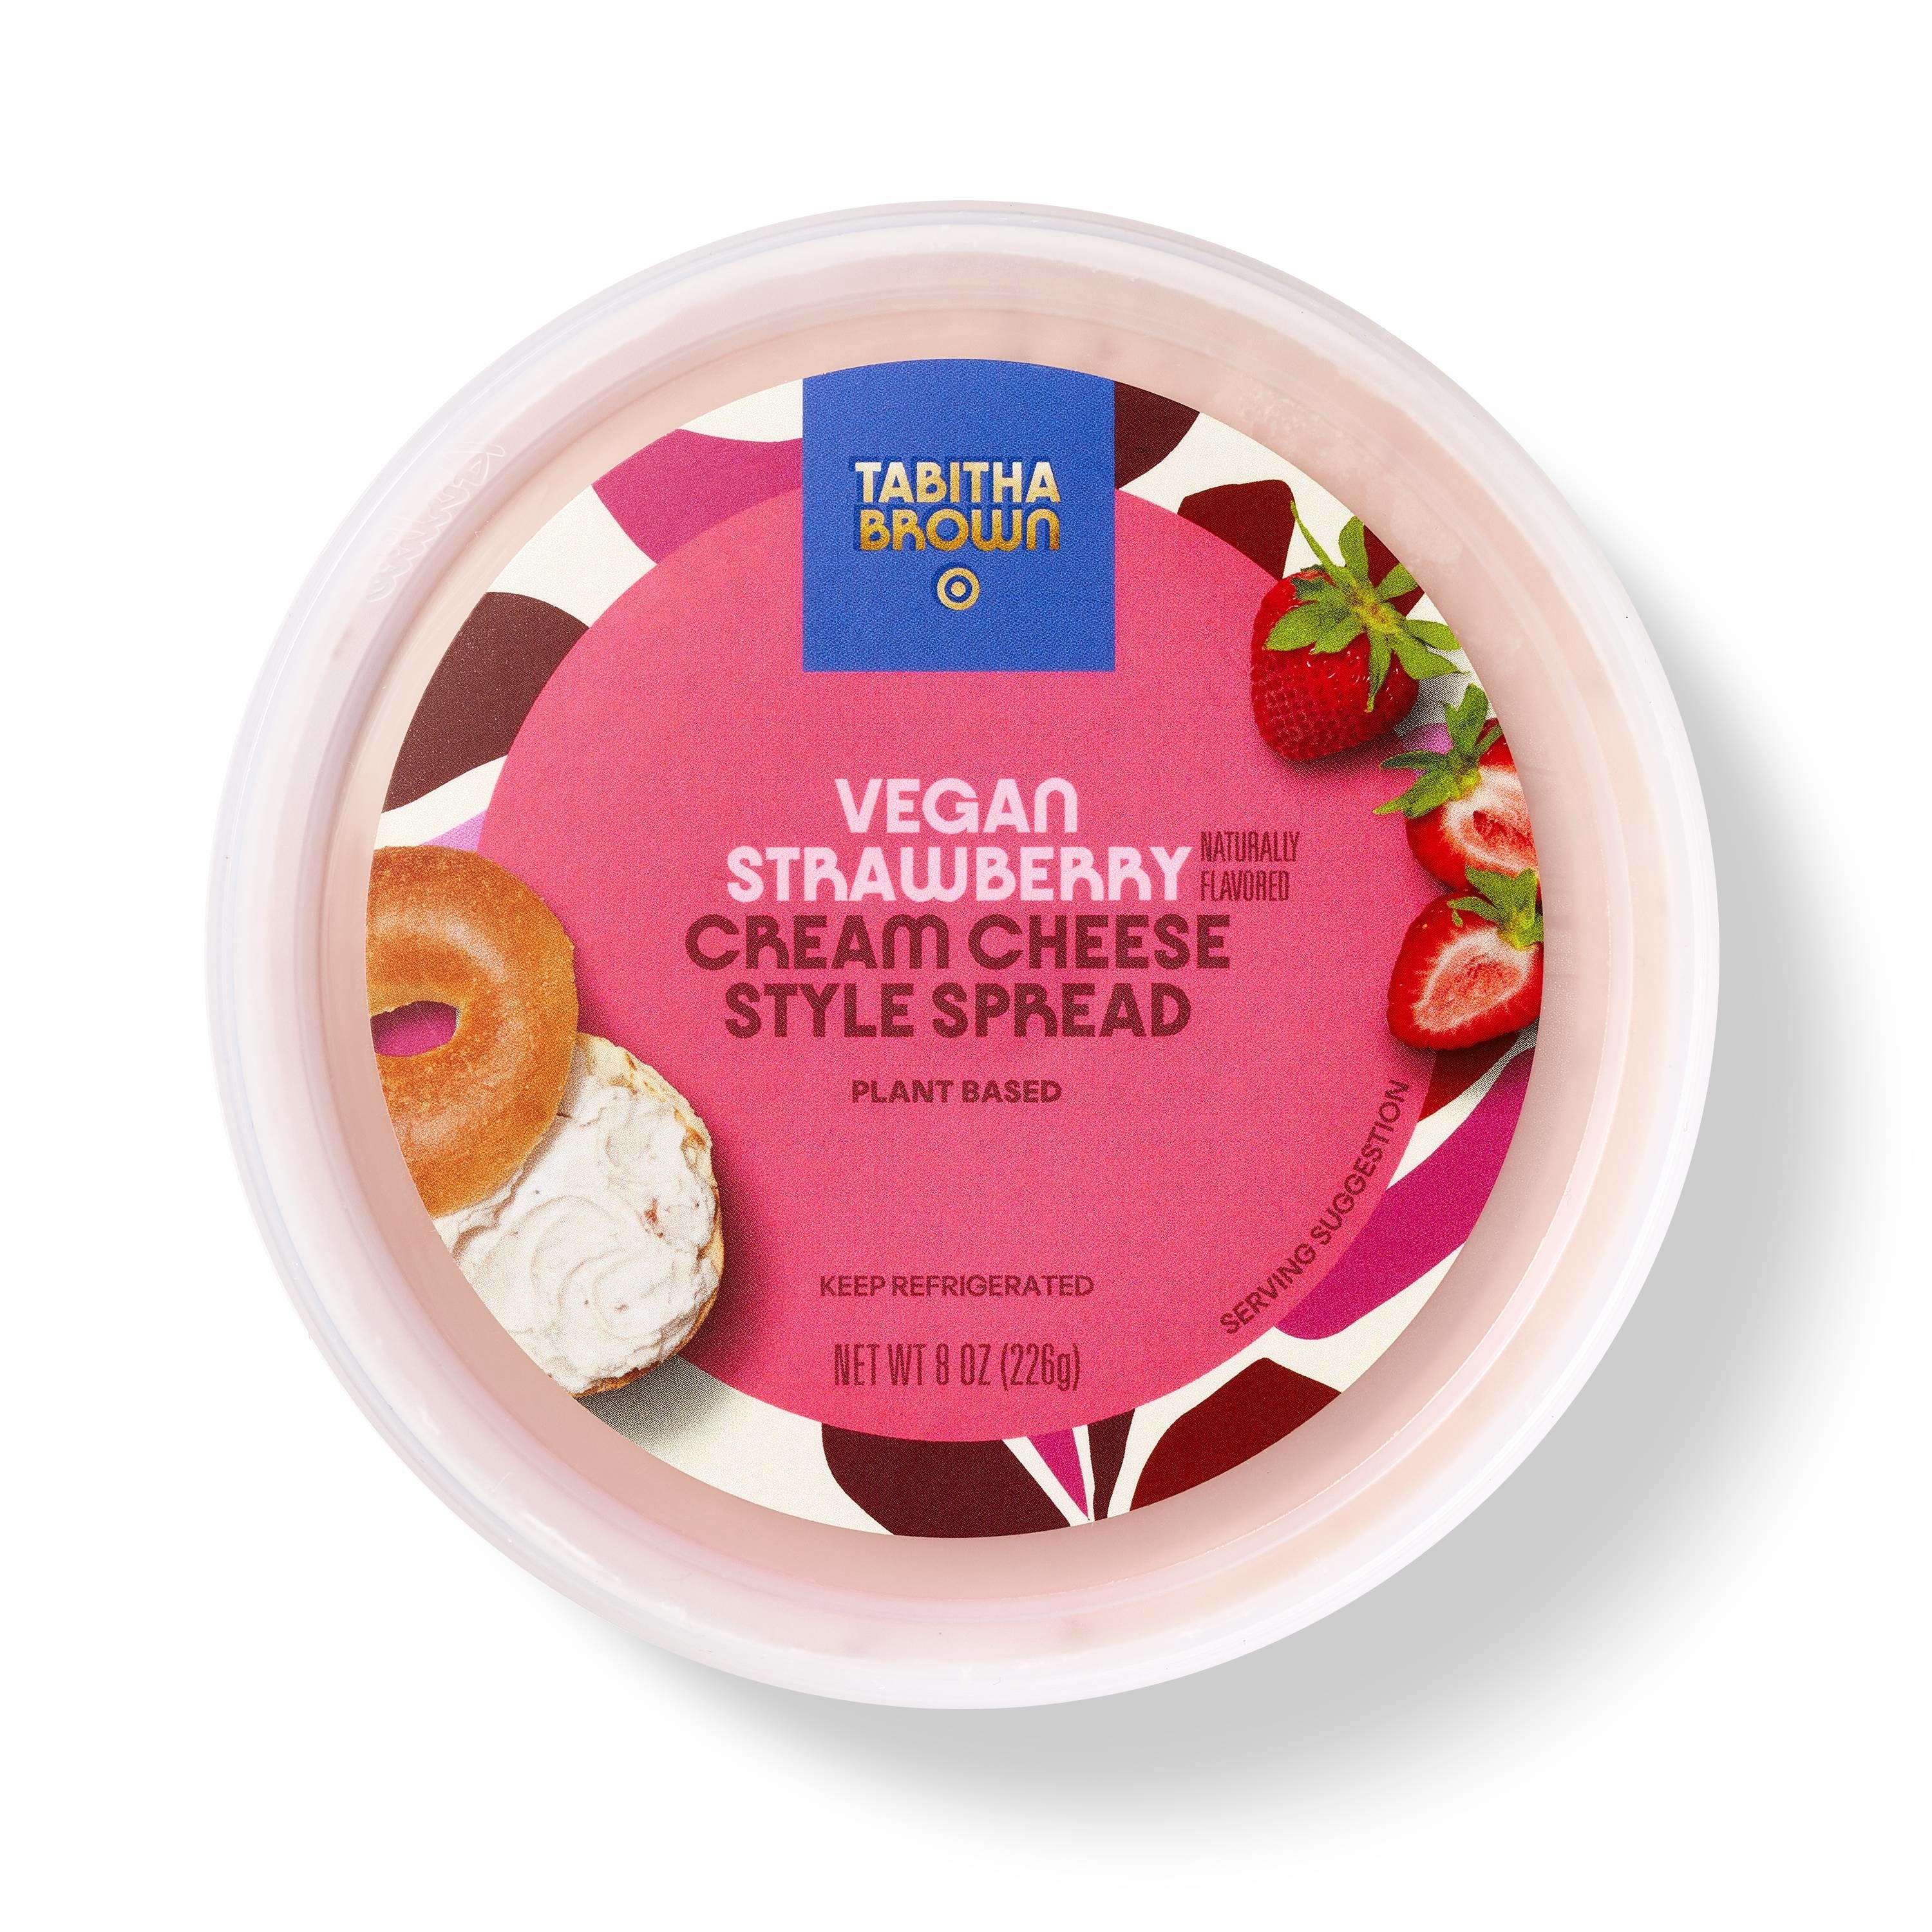 The container of vegan cream cheese